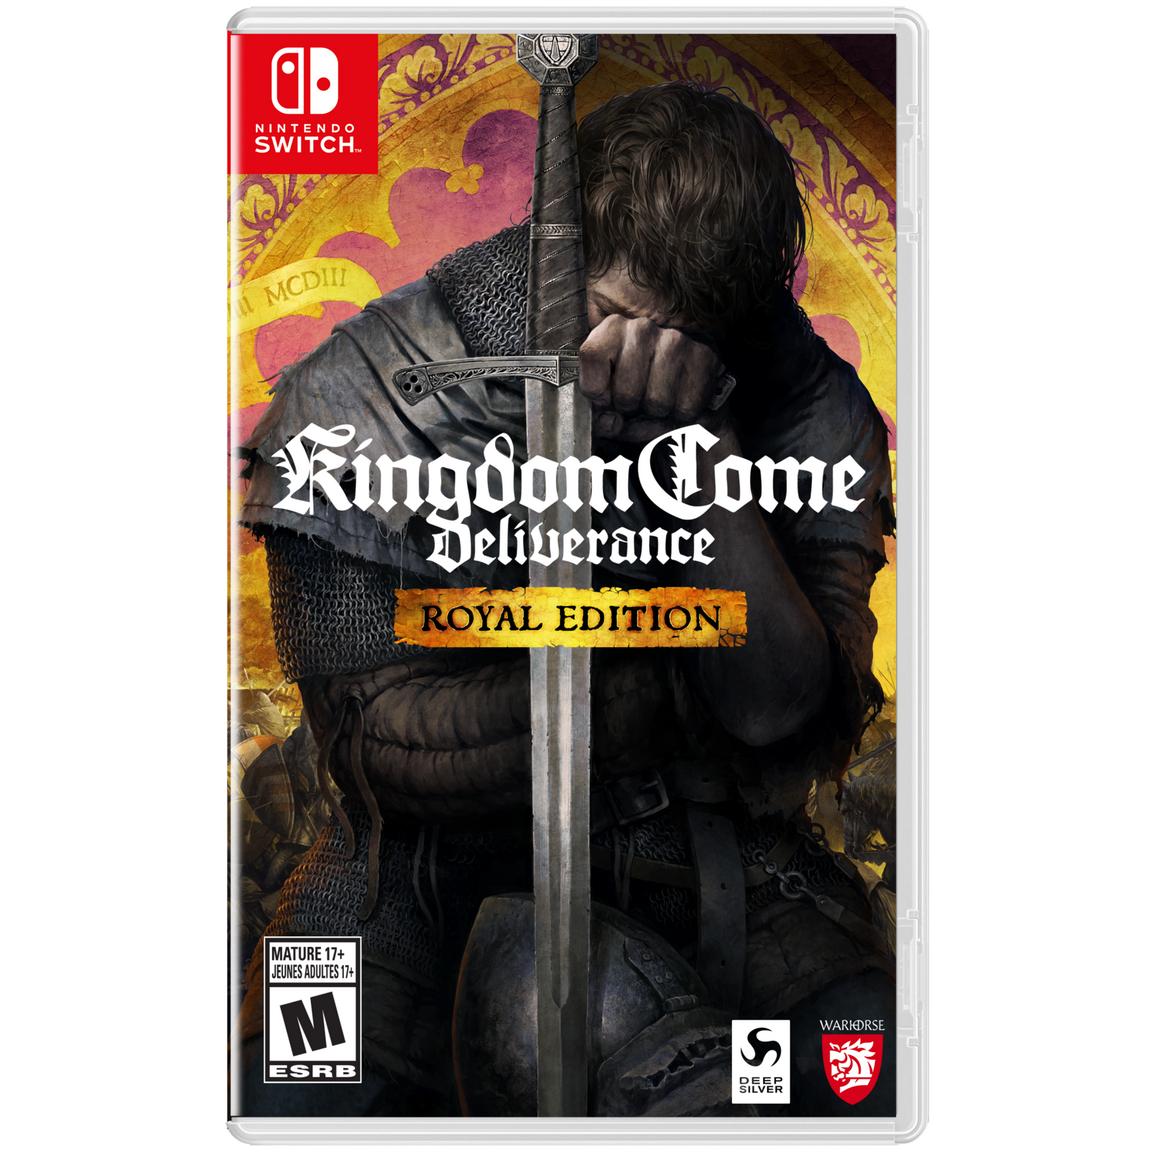 Видеоигра Kingdom Come Deliverance: Royal Edition - Nintendo Switch цифровая версия игры pc koch media kingdom come deliverance royal edition